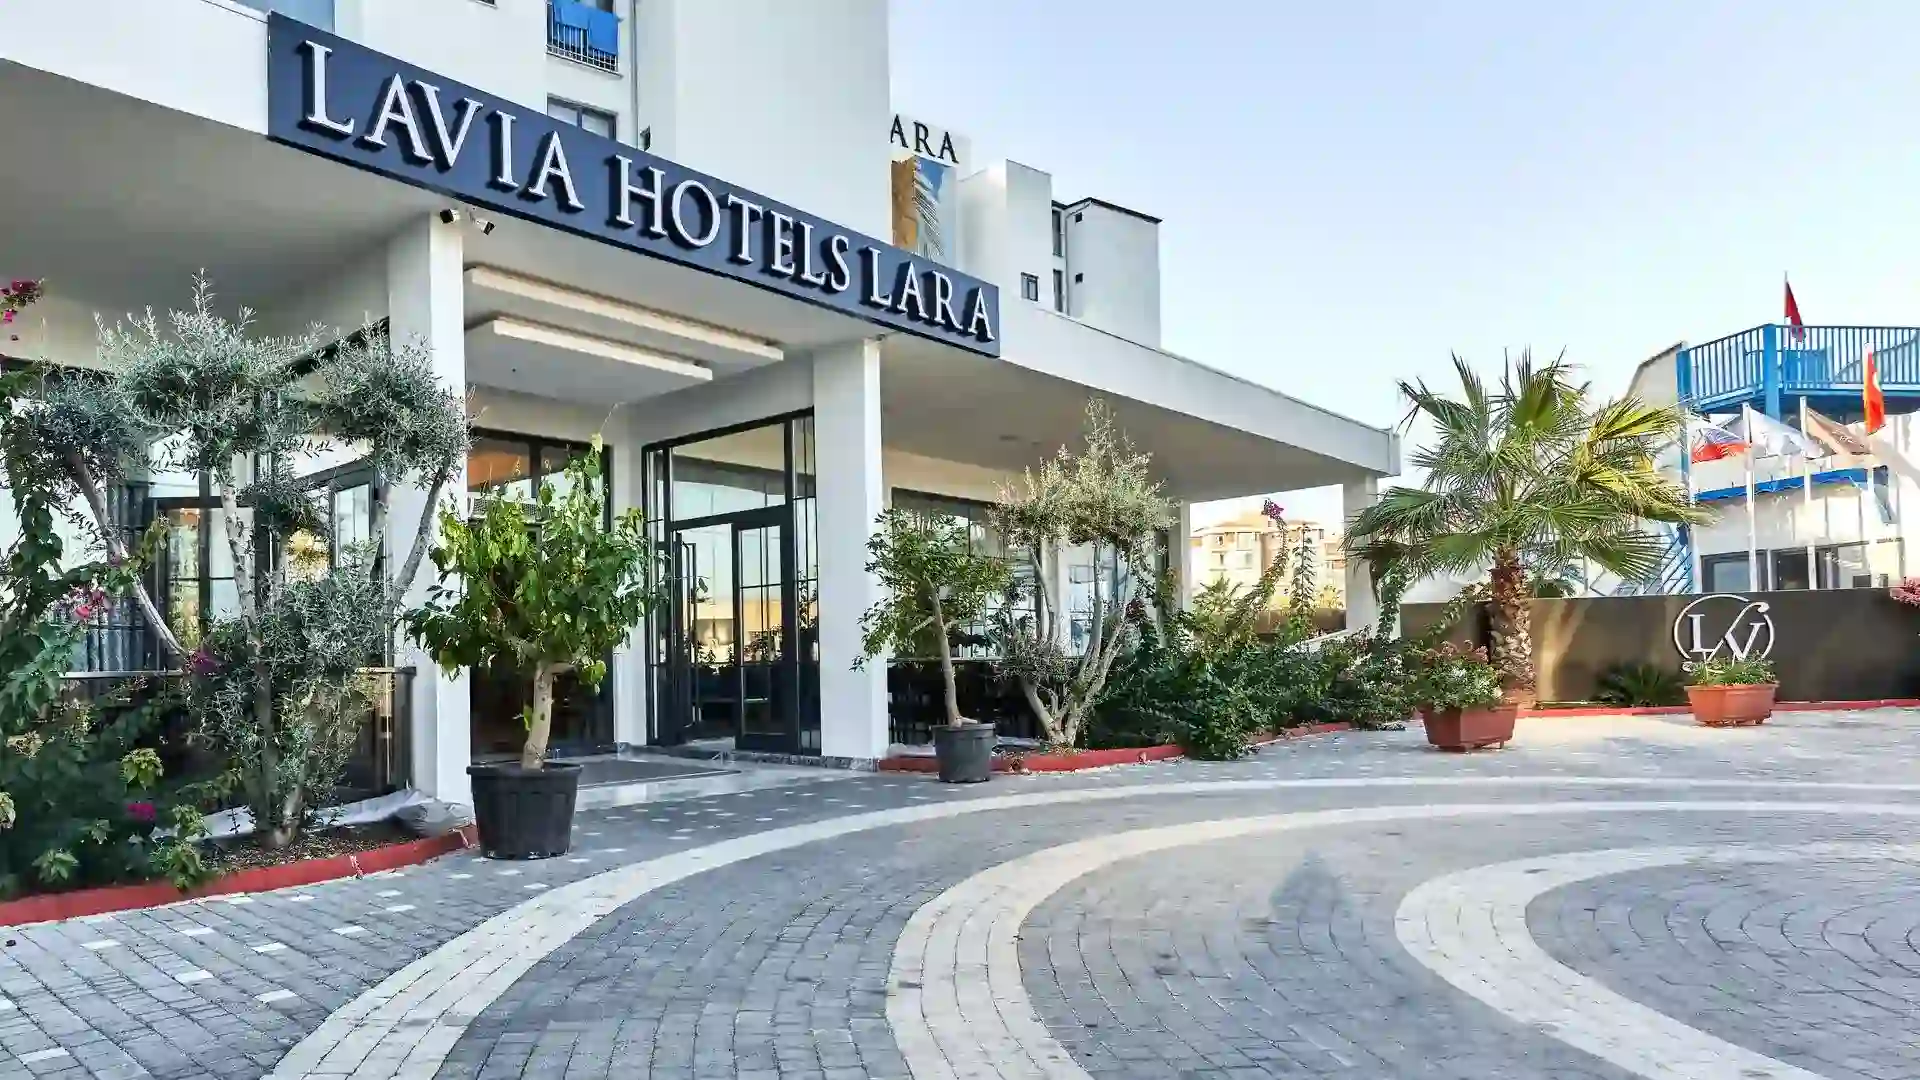 LAVIA HOTELS LARA | Restaurant